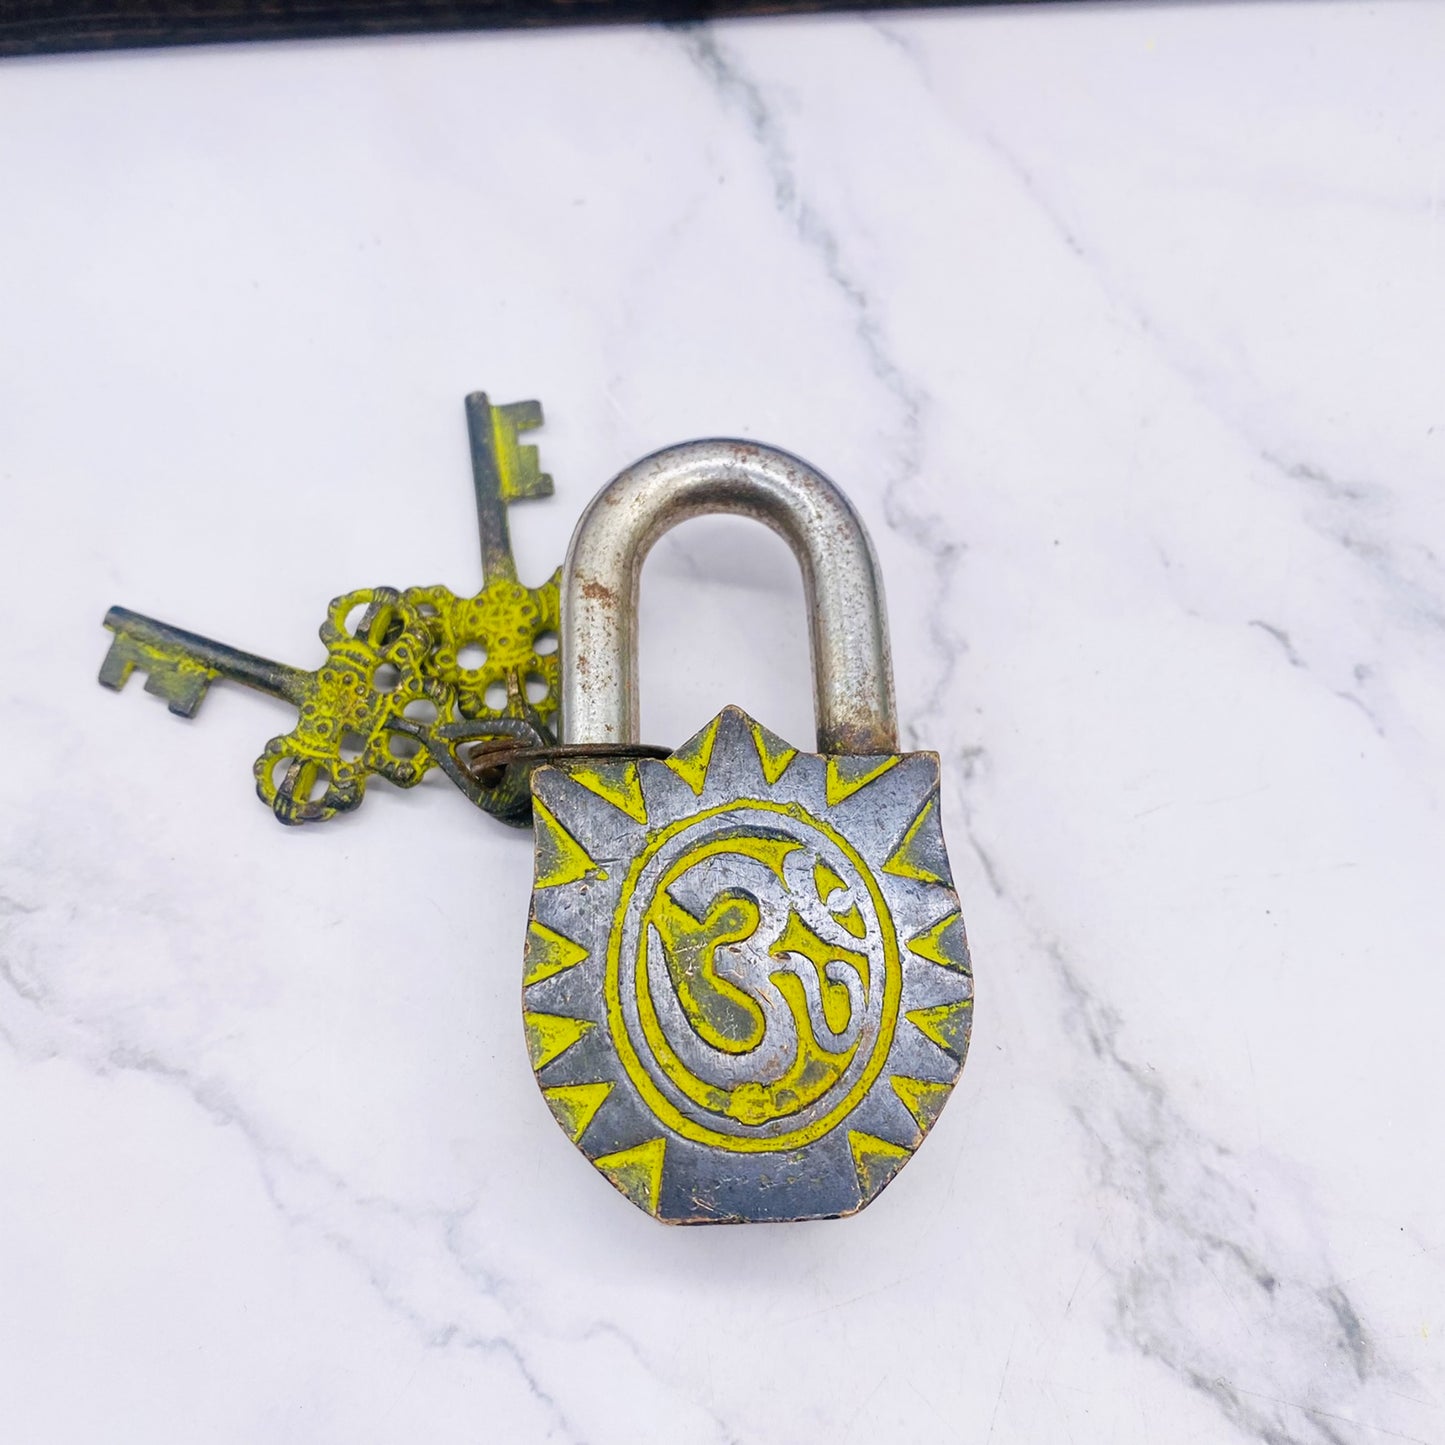 Handmade Brass Shiva Door Lock with Two Keys from Nepal, Door Lock, Vintage Door Locks, Vintage Looking pad Lock